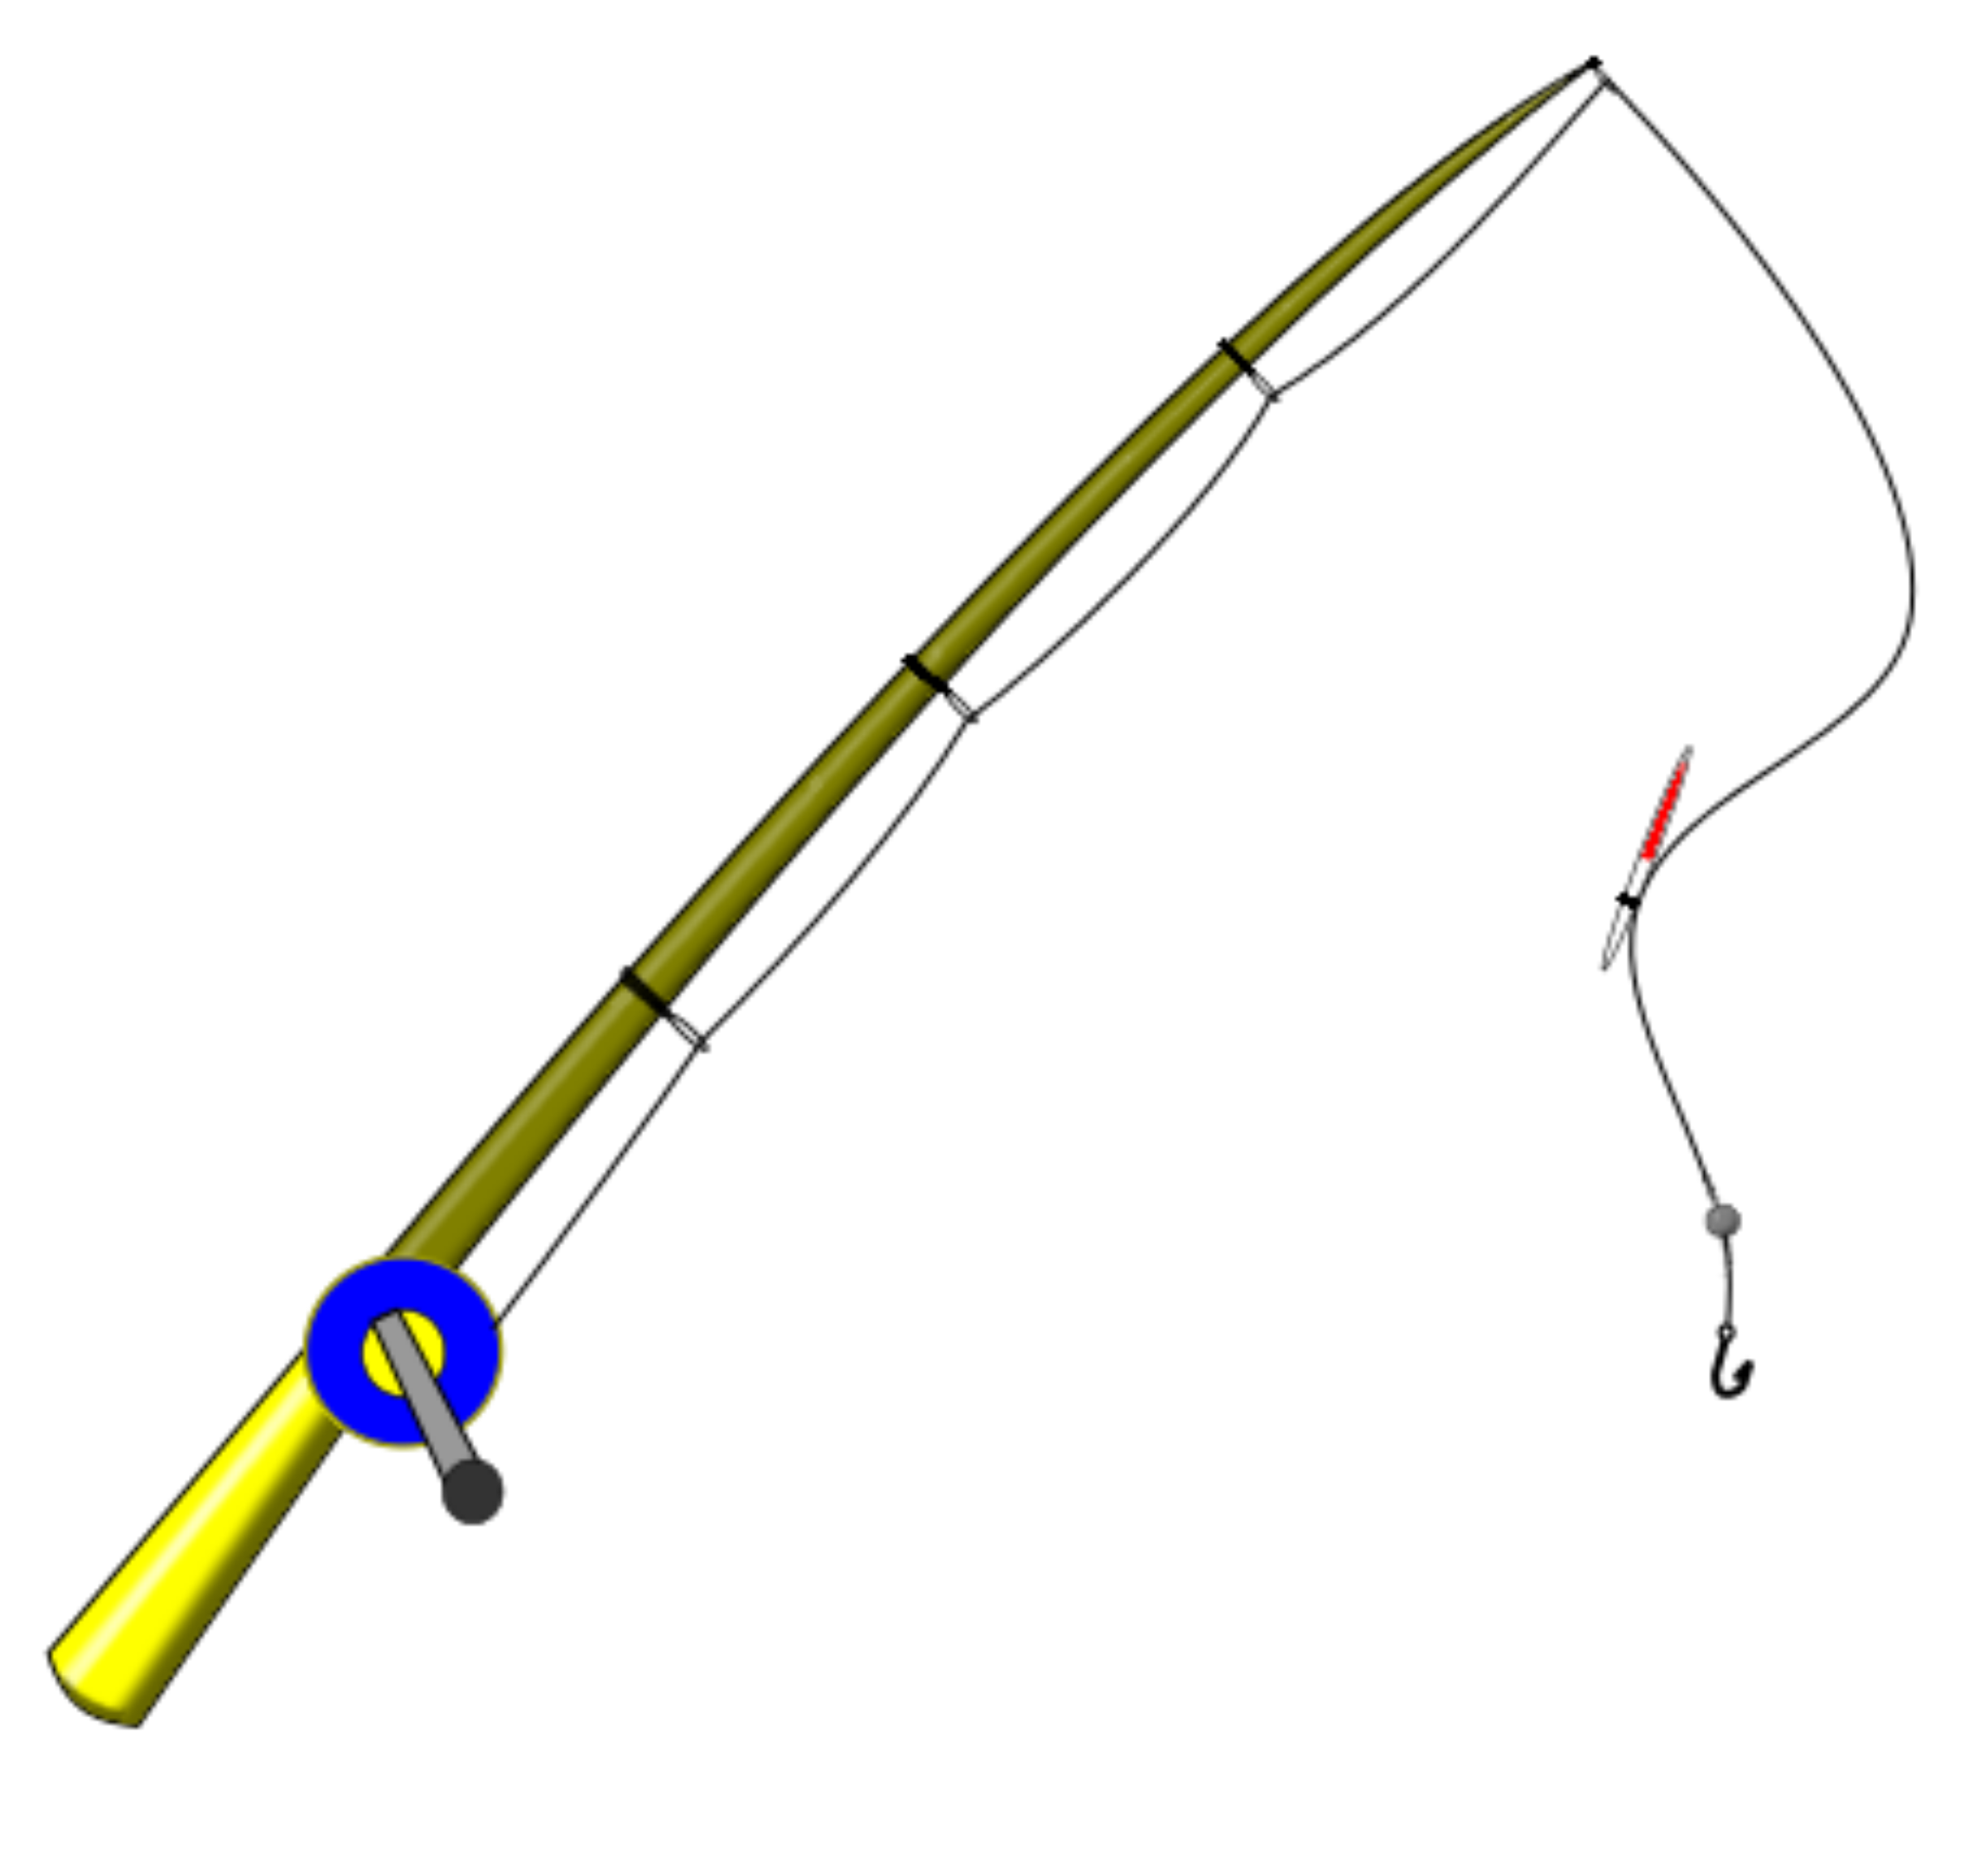 Fishing Pole Fishing Rod Image Transparent Image Clipart